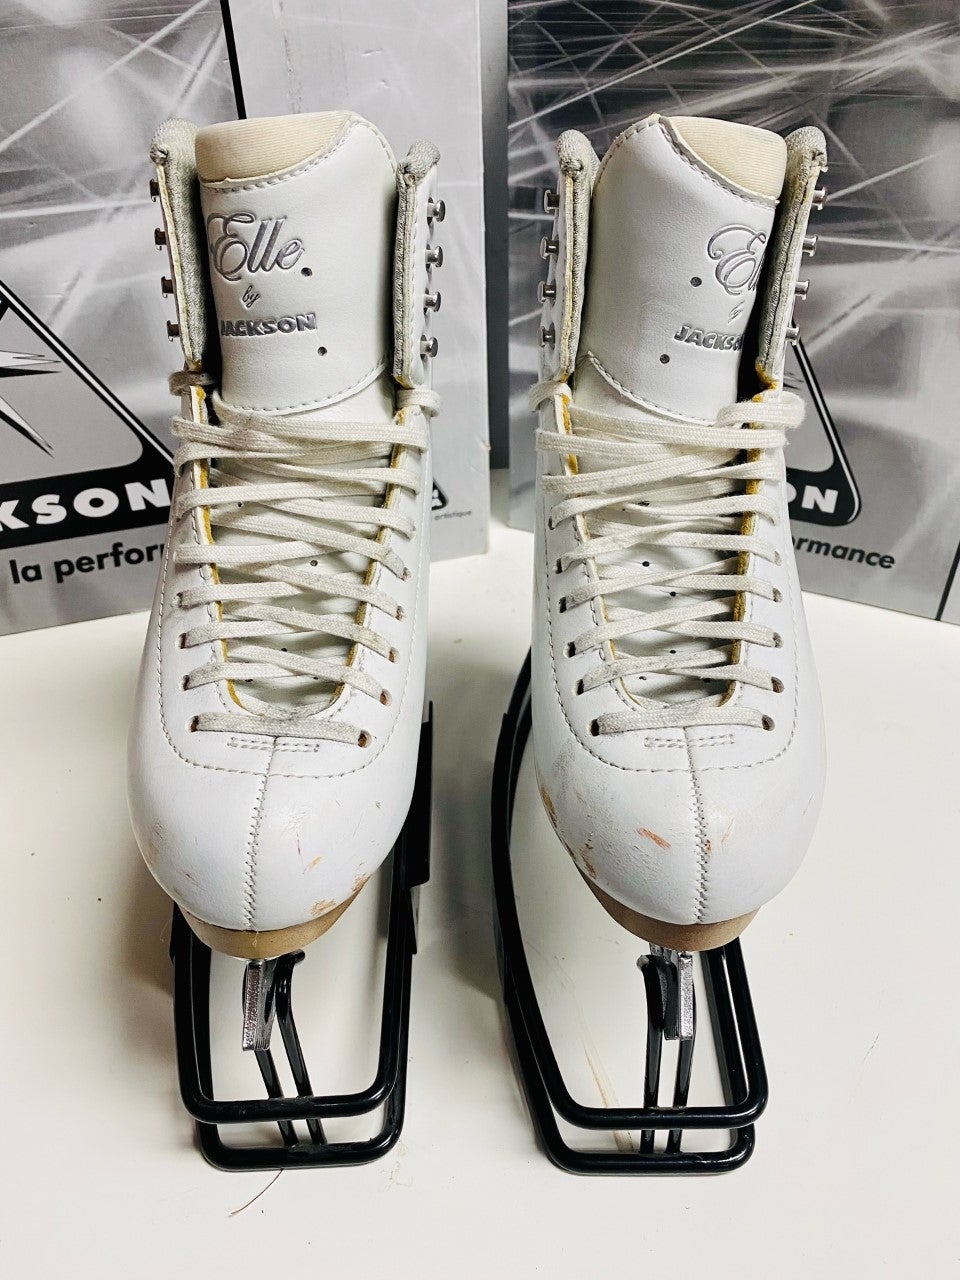 Jackson Ultima フュージョン Elle and Freestyle フィギュア アイススケート靴 レディース メンズ ガールズ ボーイズ  JUST LAUNCHED 2019 通販